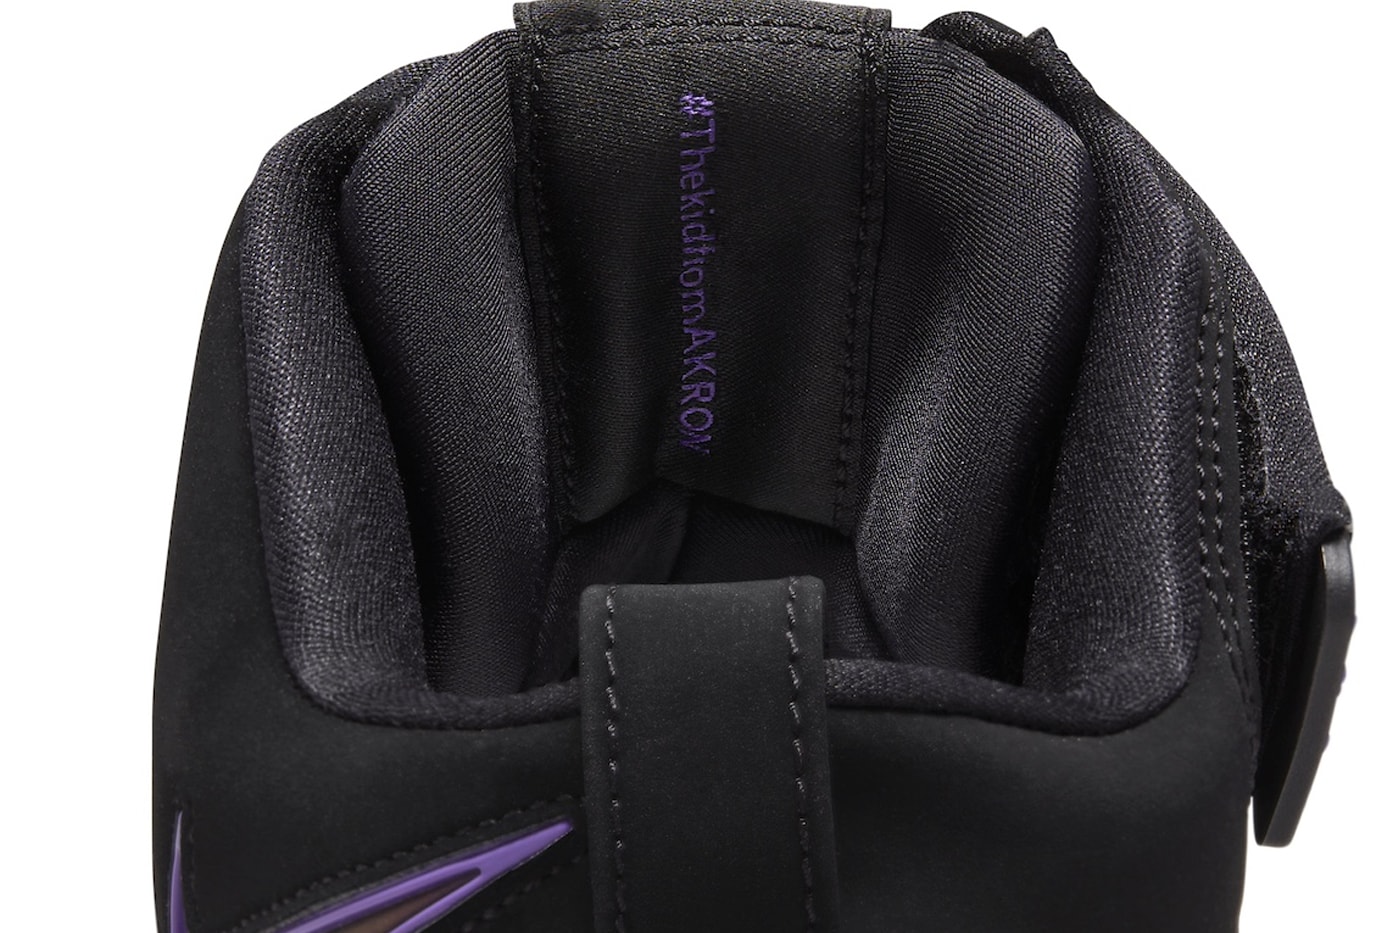 Official Look at the Nike LeBron 4 "Eggplant" Black/Varsity Purple-Blue Tint FN6251-001 lebron james king james los angeles lakers